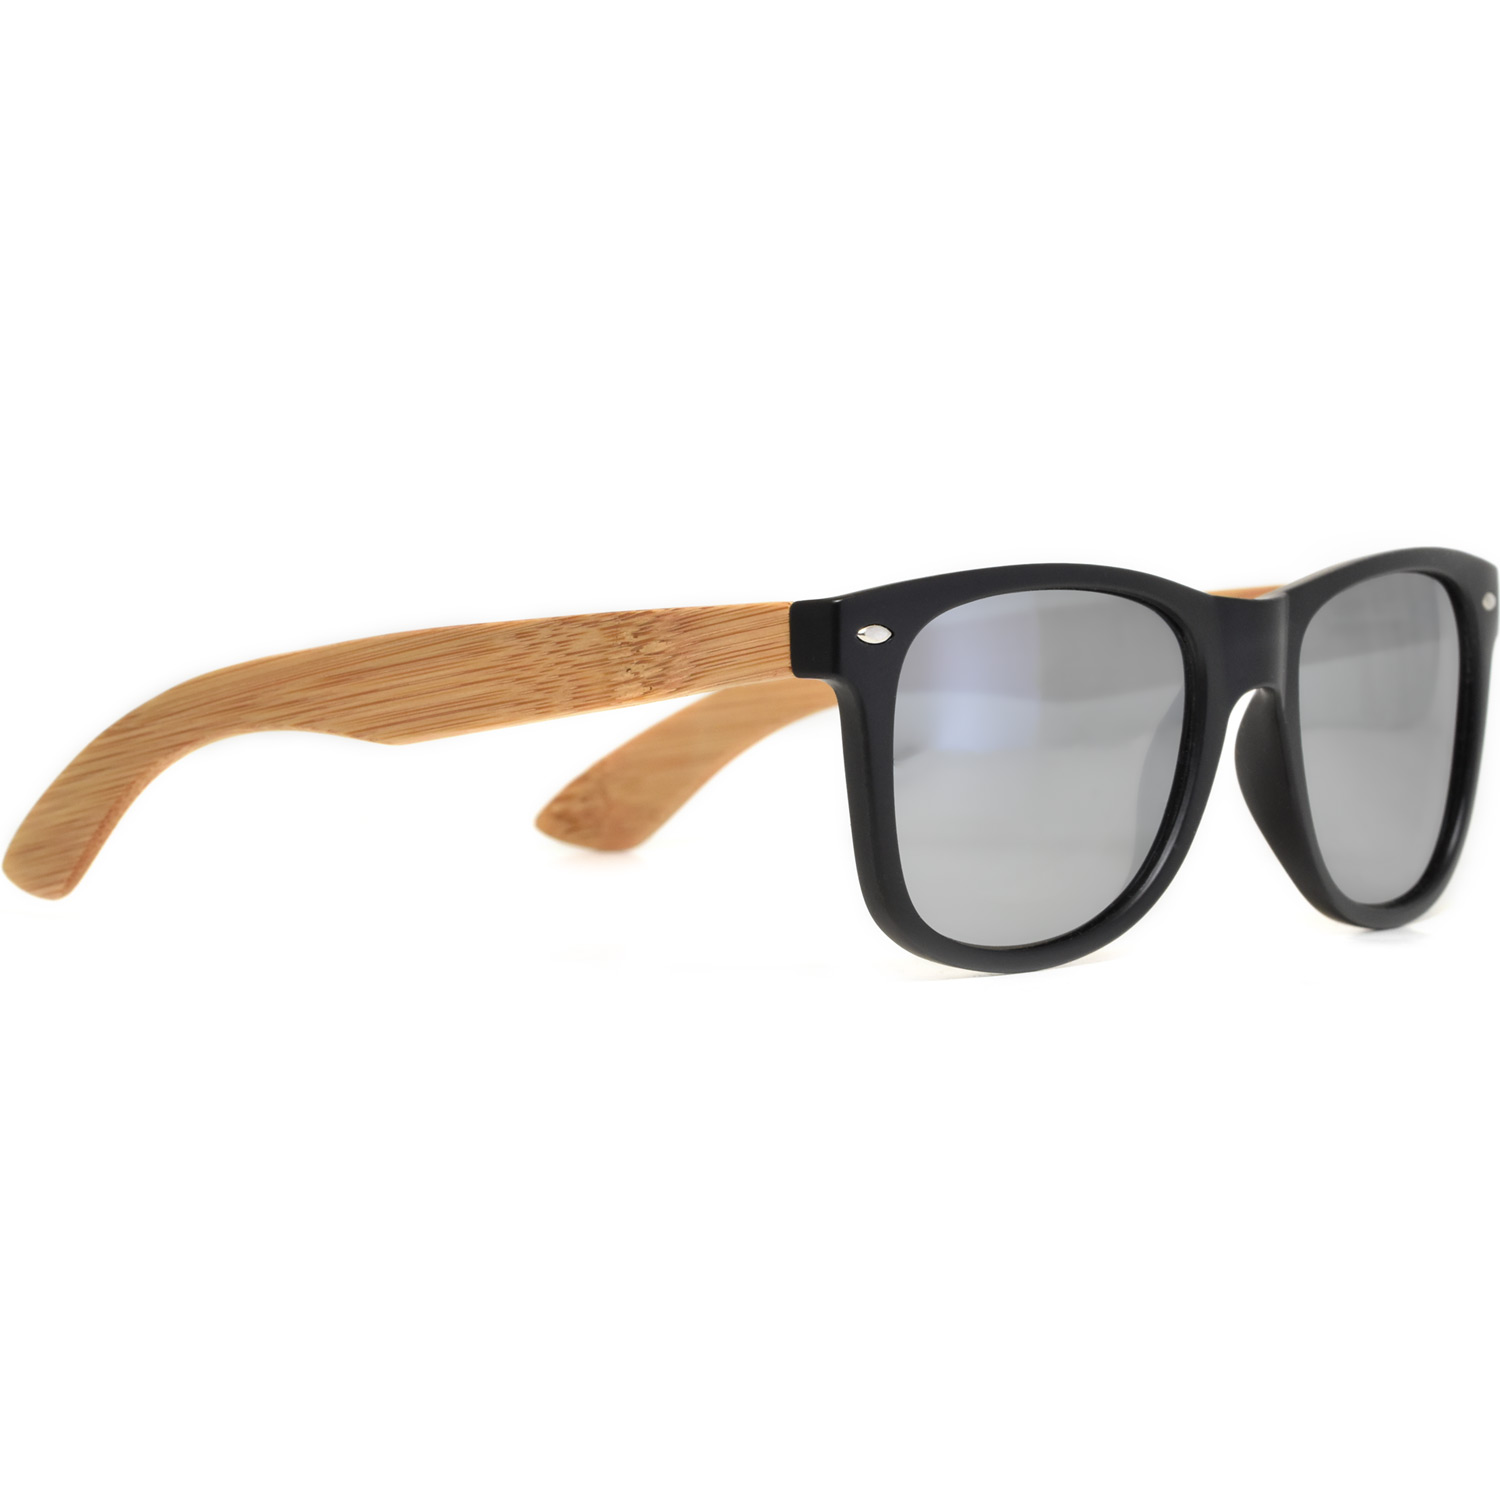 Bamboo wood wayfarer sunglasses silver lenses